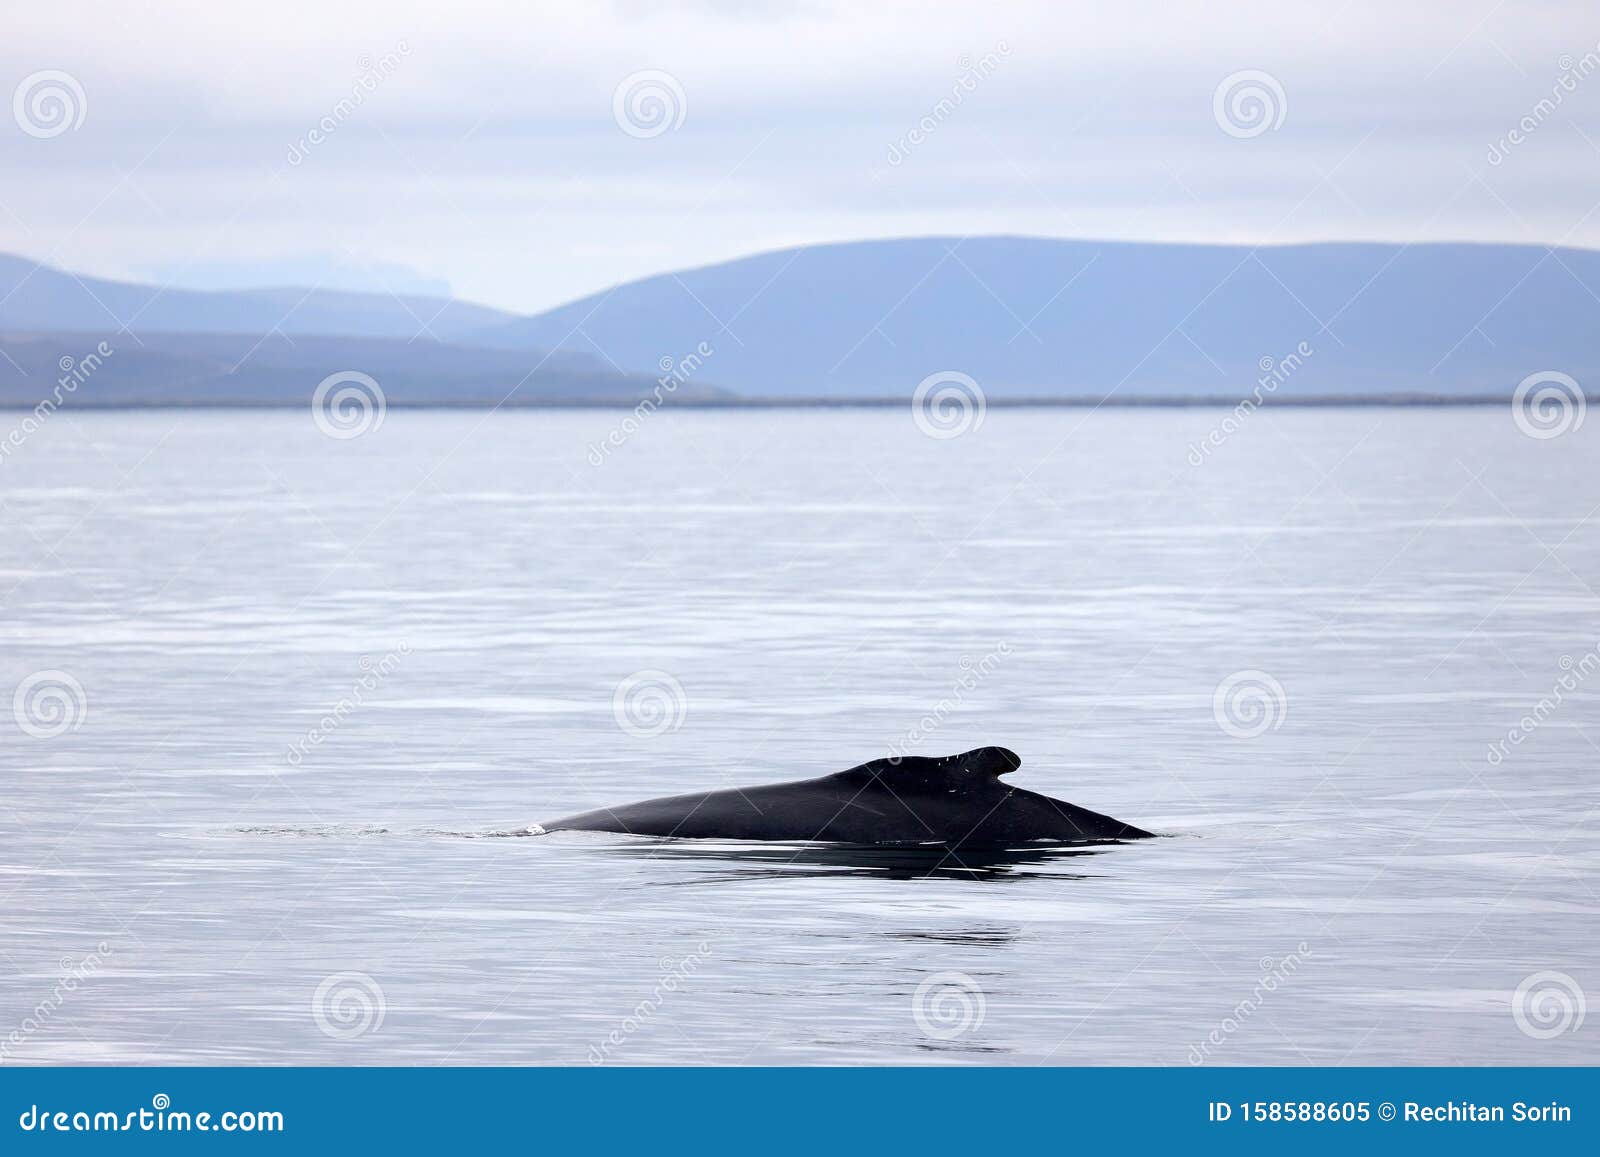 whale watching in skjalfandi bay.